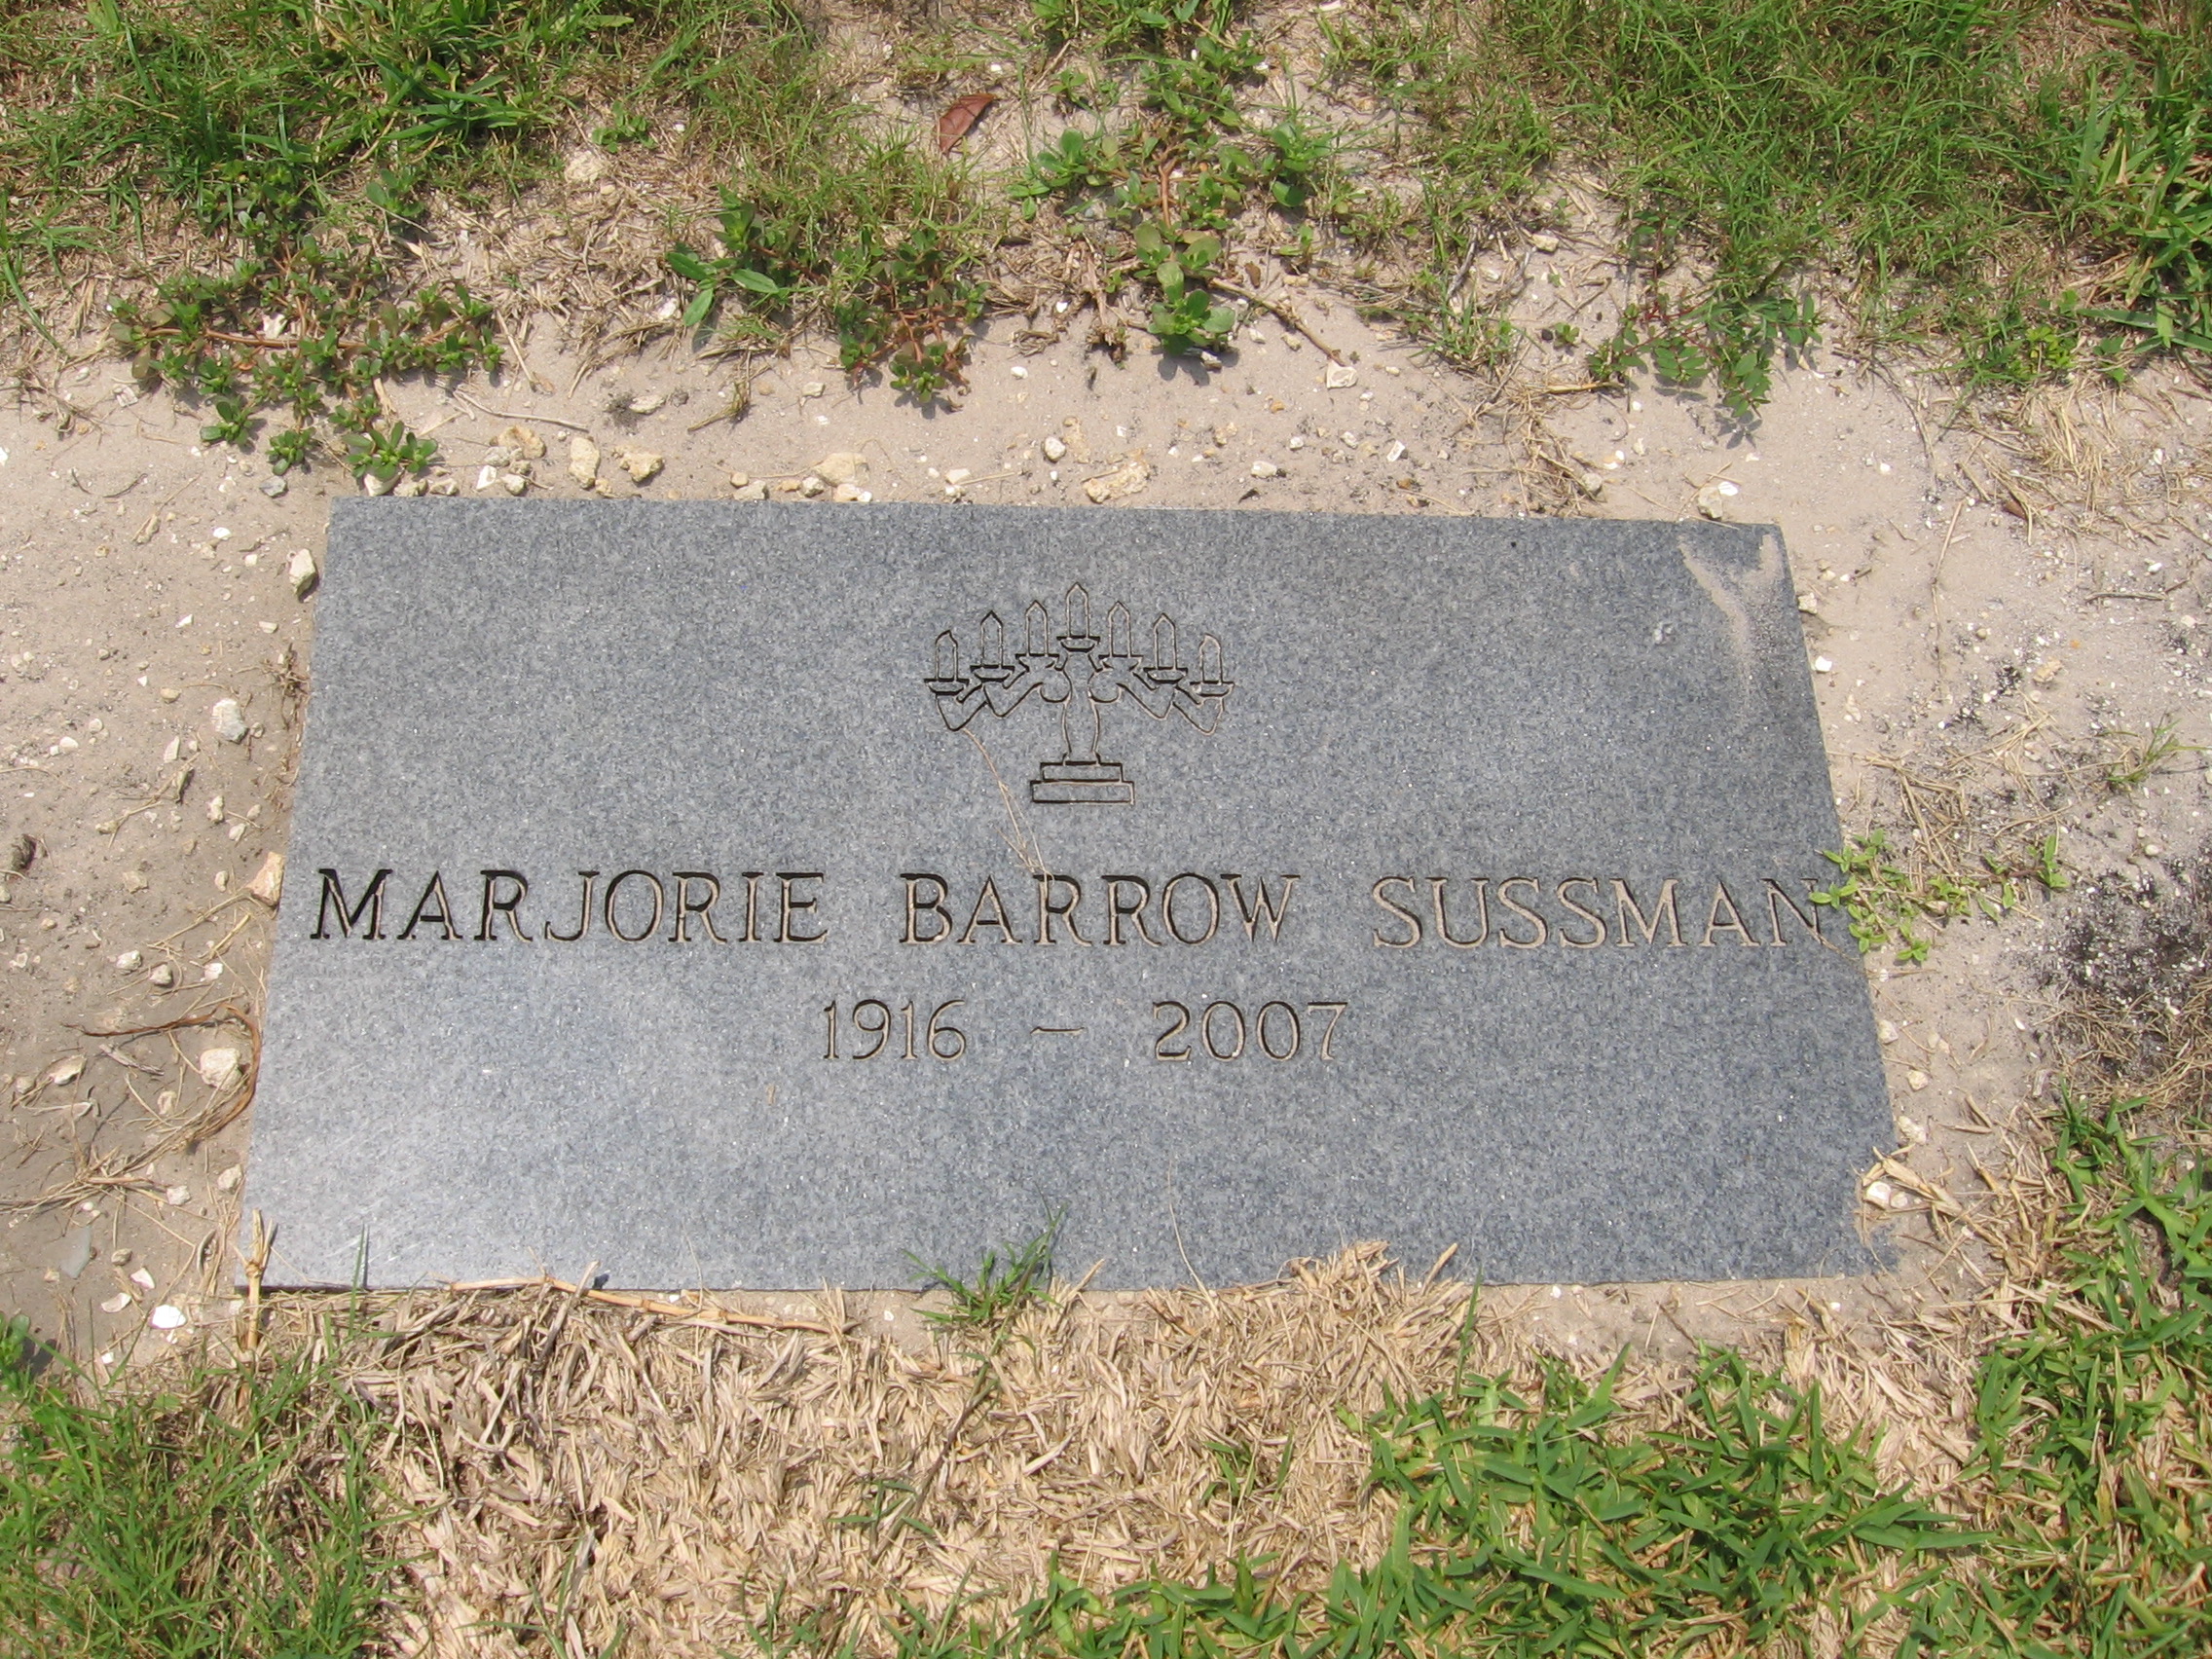 Marjorie Barrow Sussman